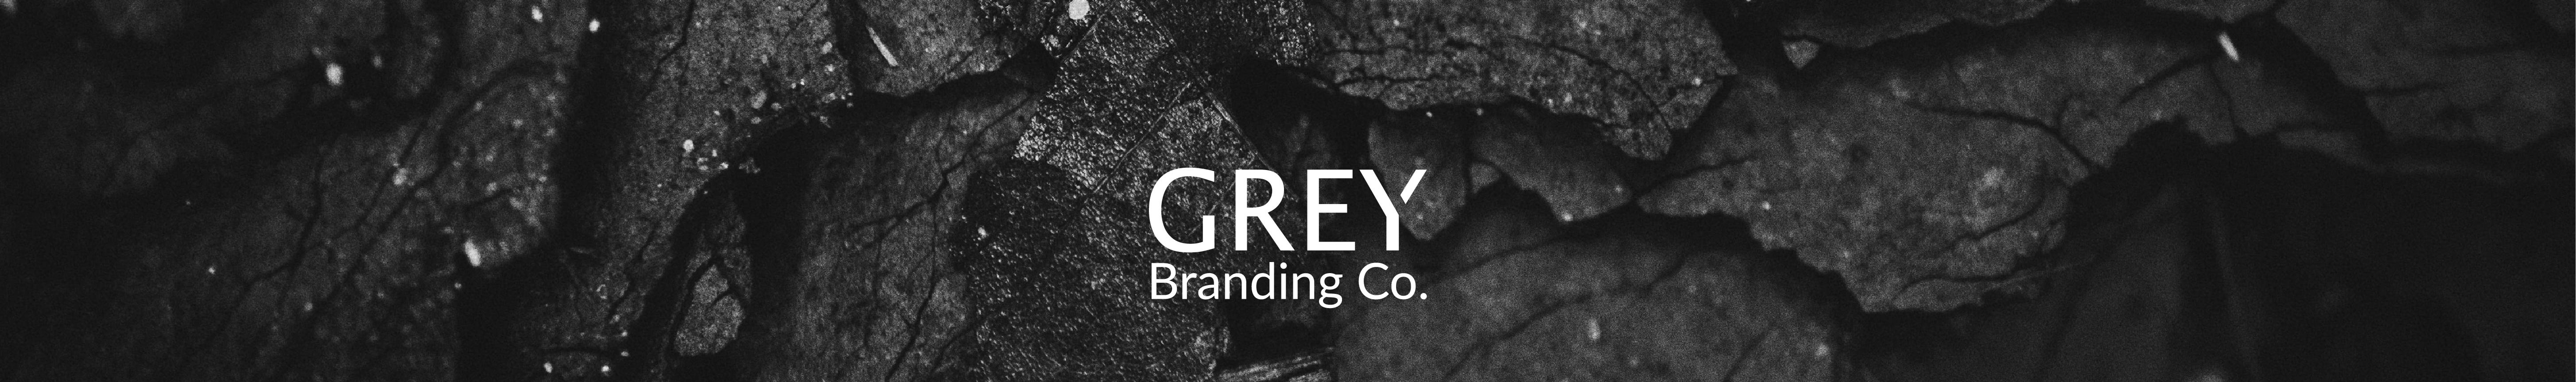 Grey Branding's profile banner